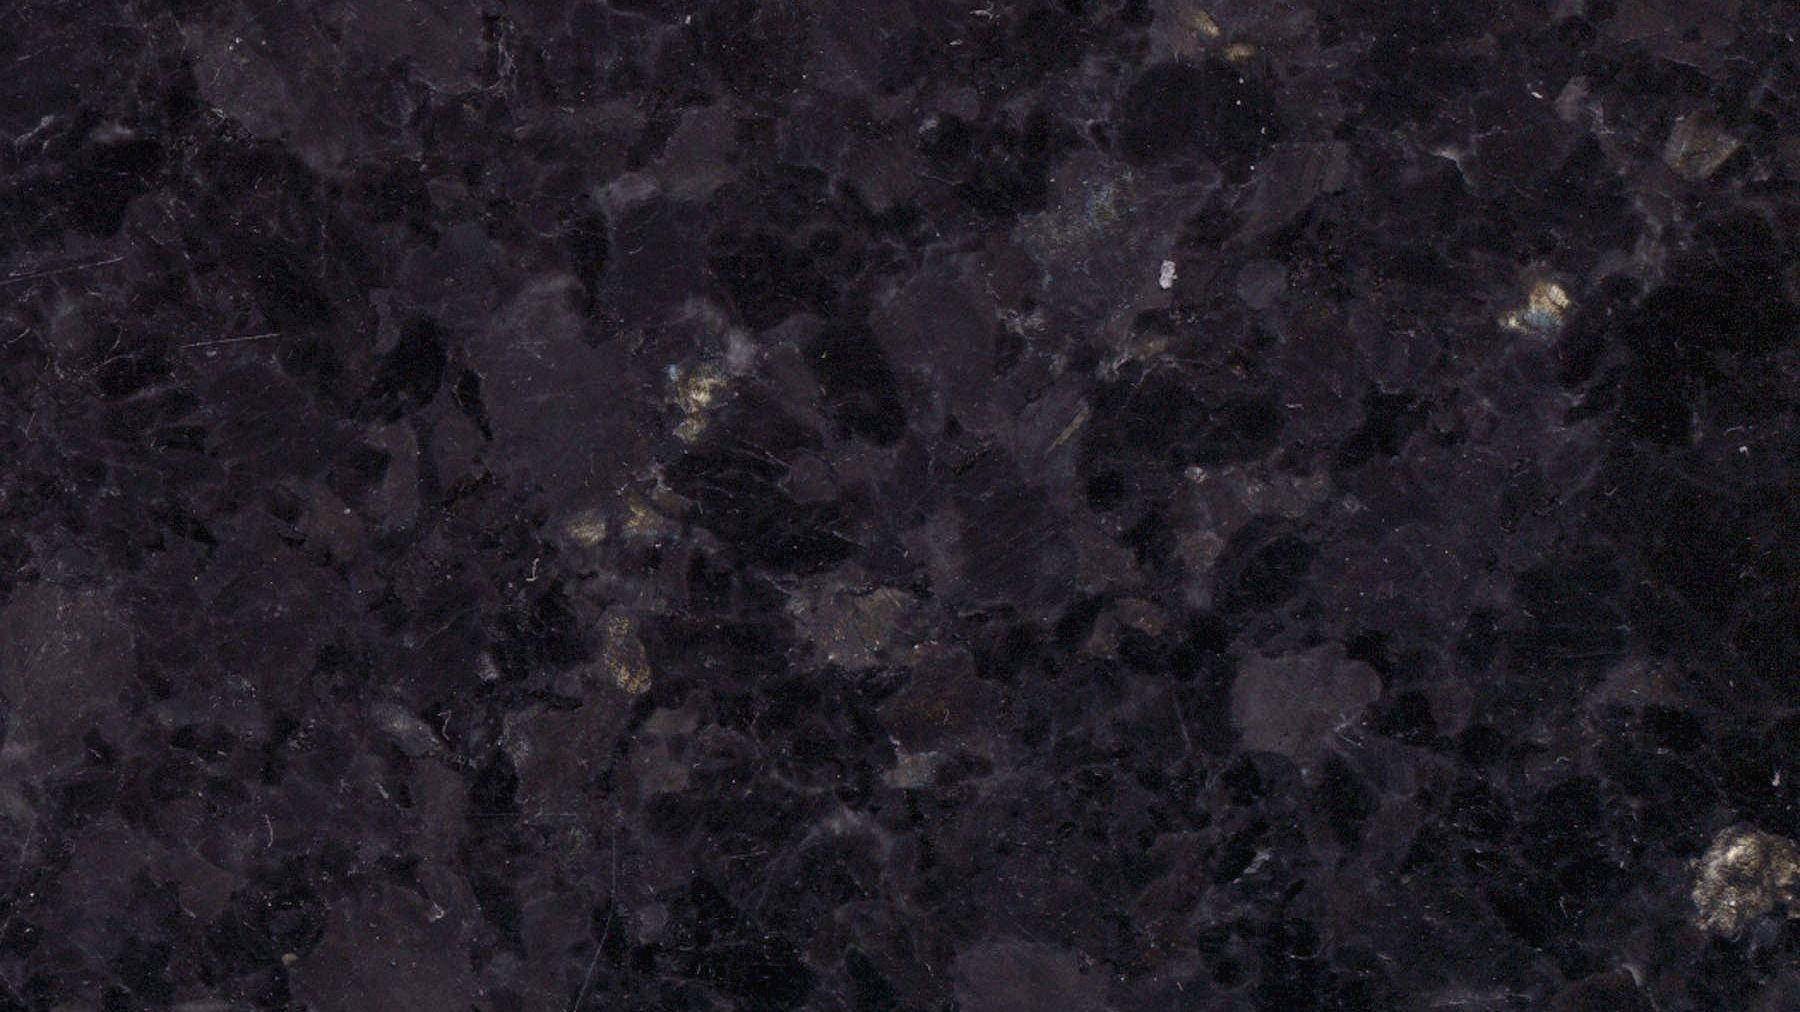 Murky-looking Black Marble Iphone Wallpaper